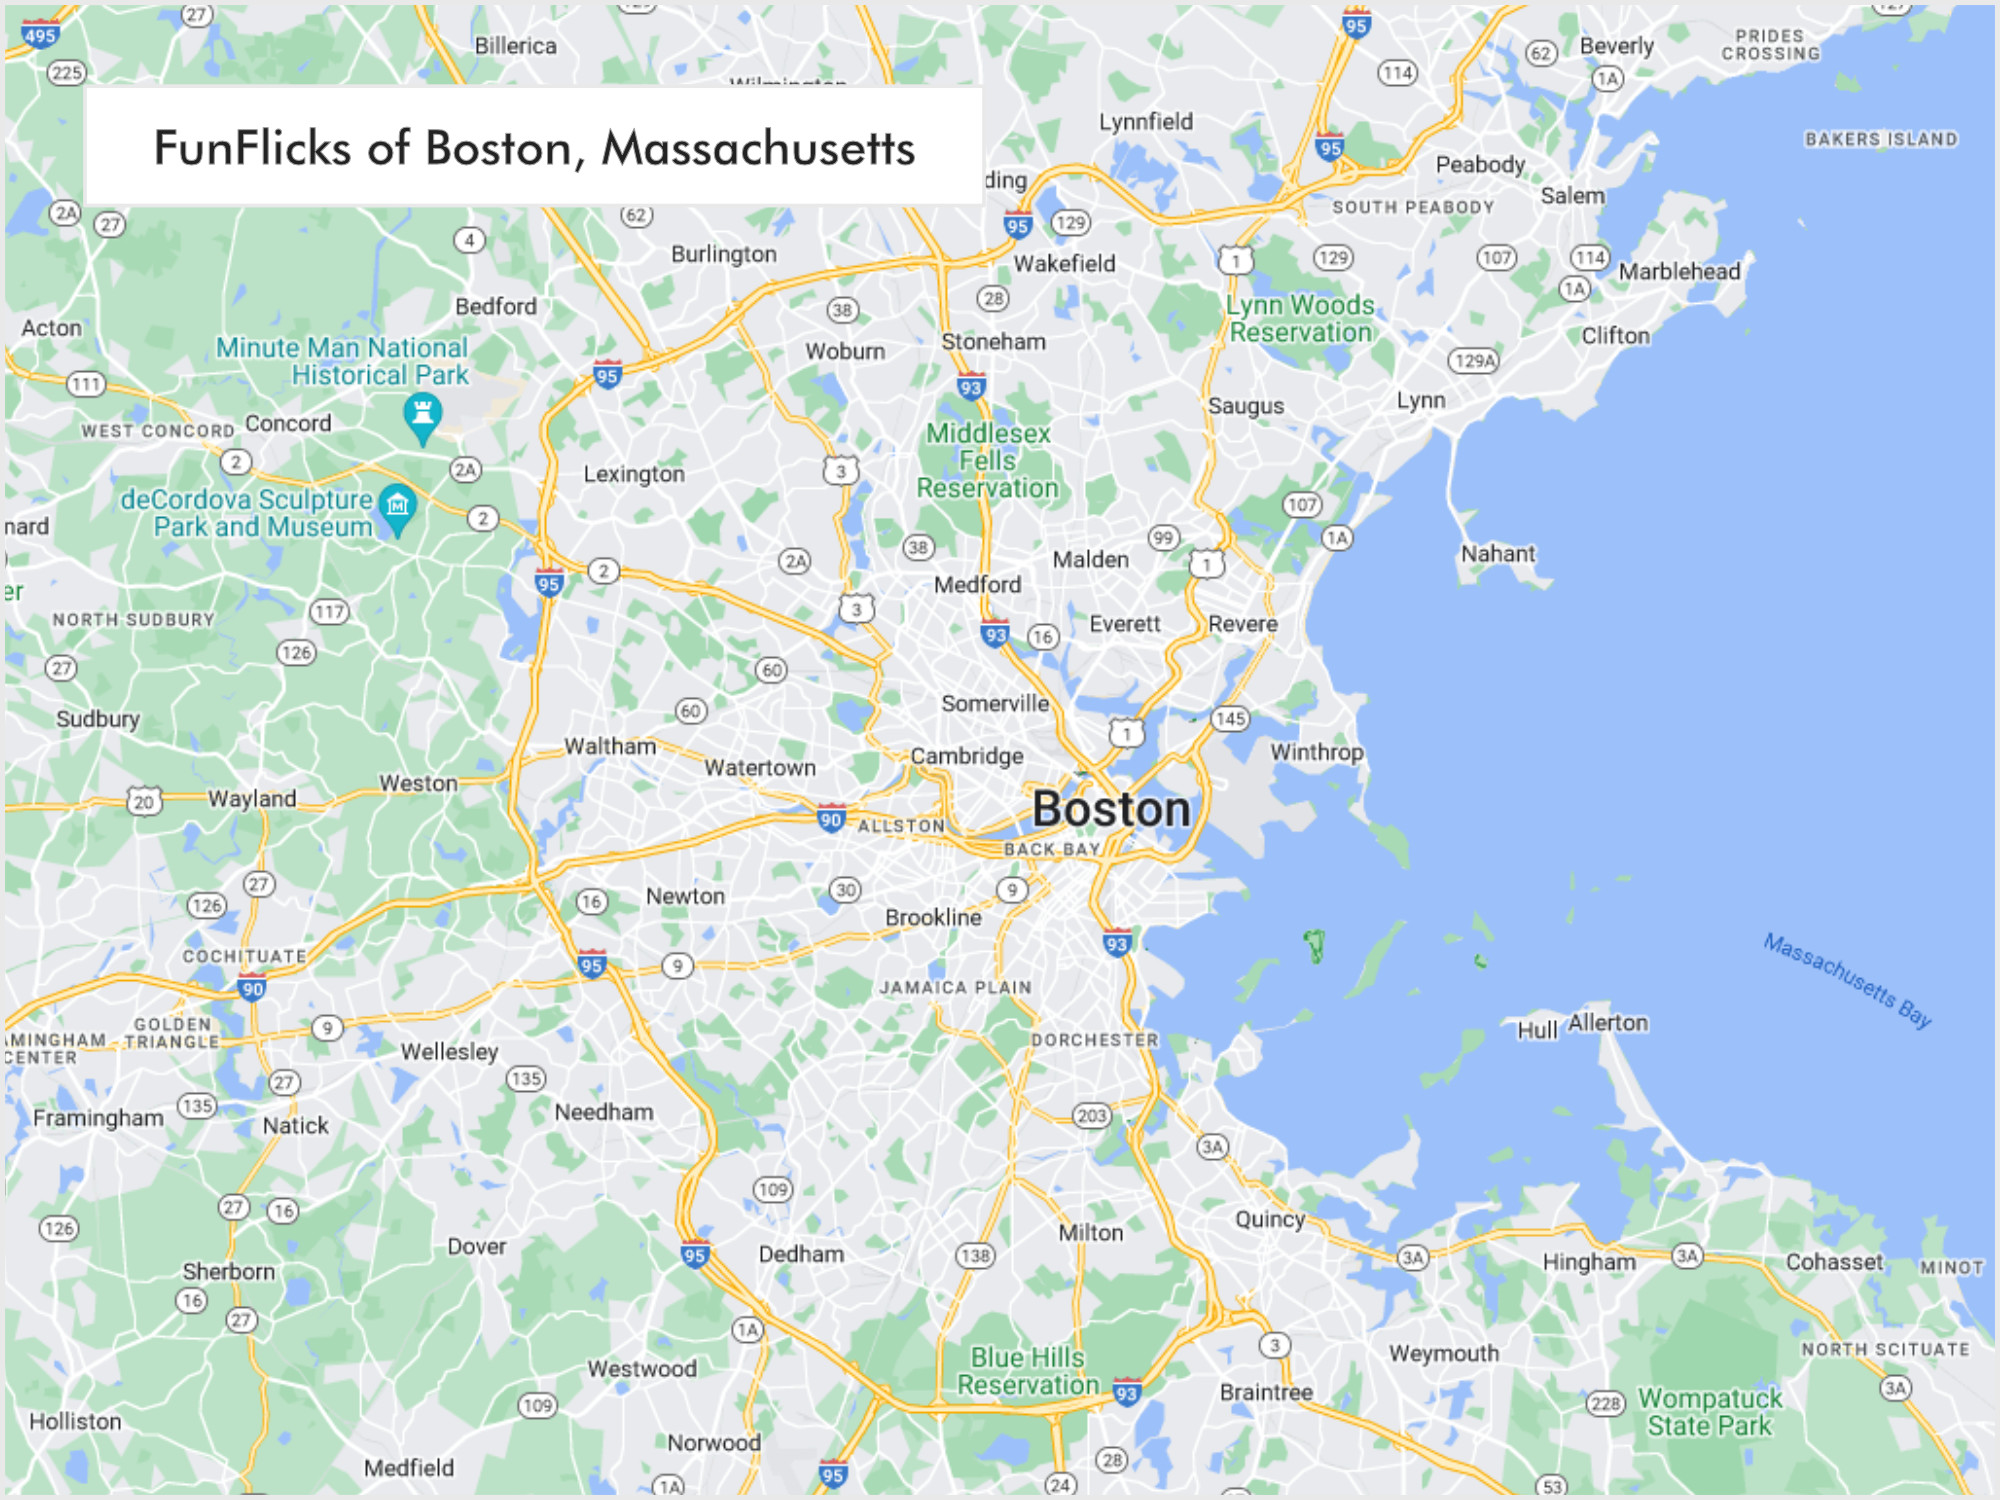 FunFlicks® Boston territory map